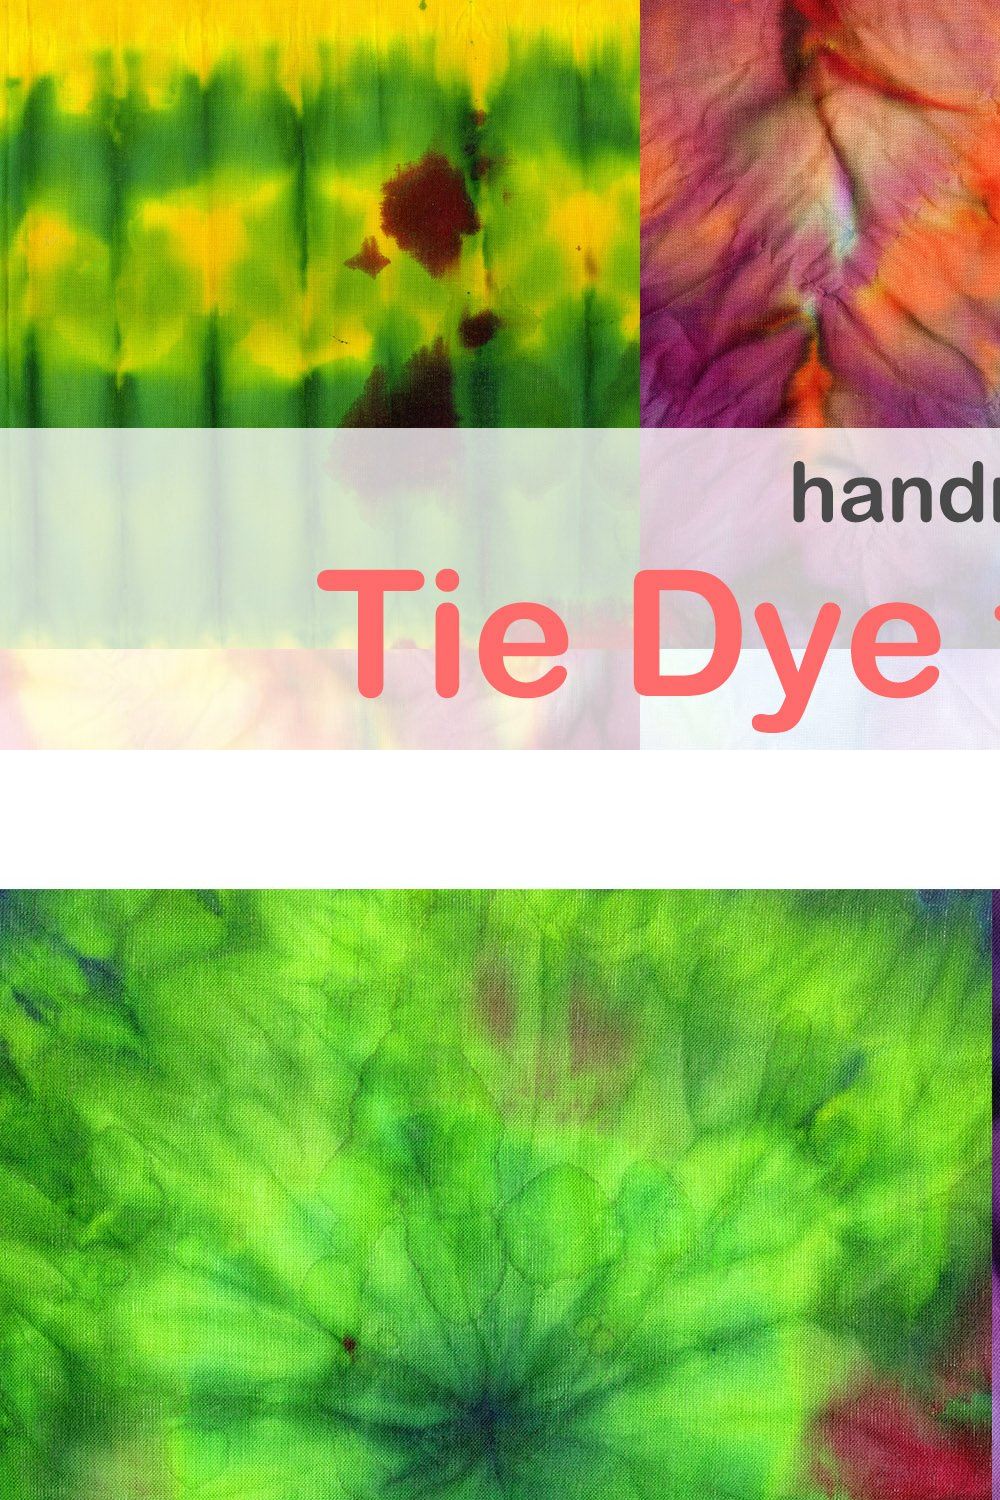 Tie Dye textures pinterest preview image.